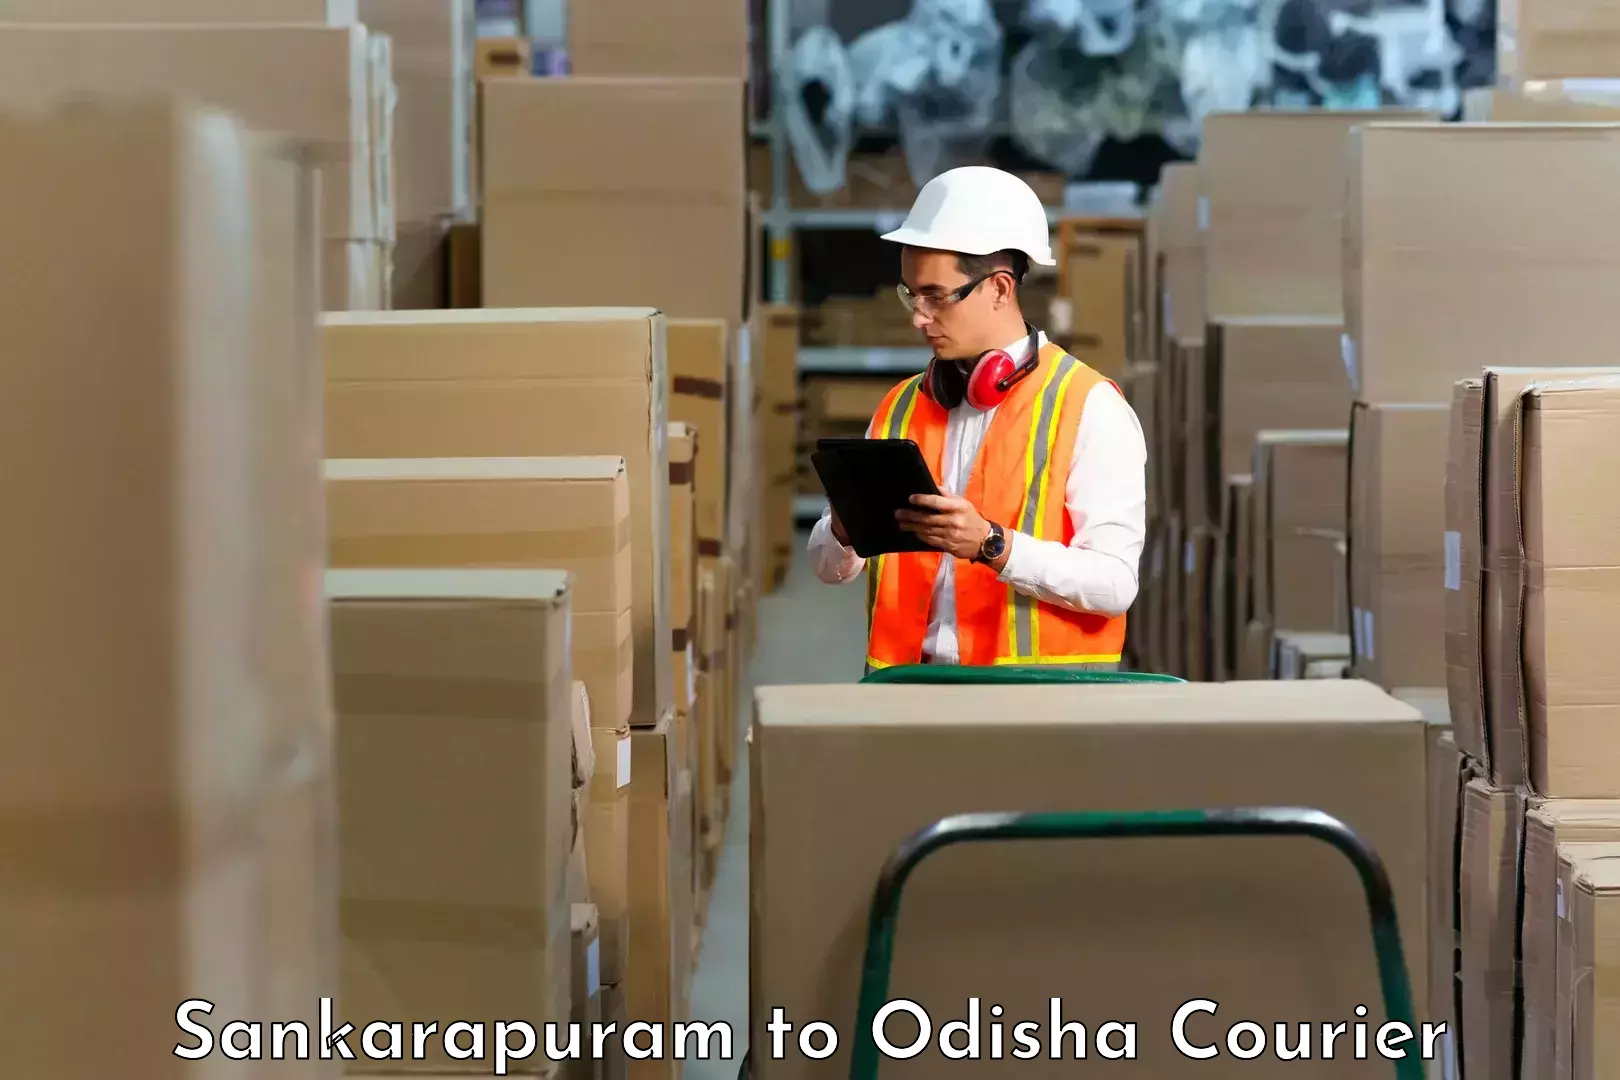 Secure packaging in Sankarapuram to Cuttack